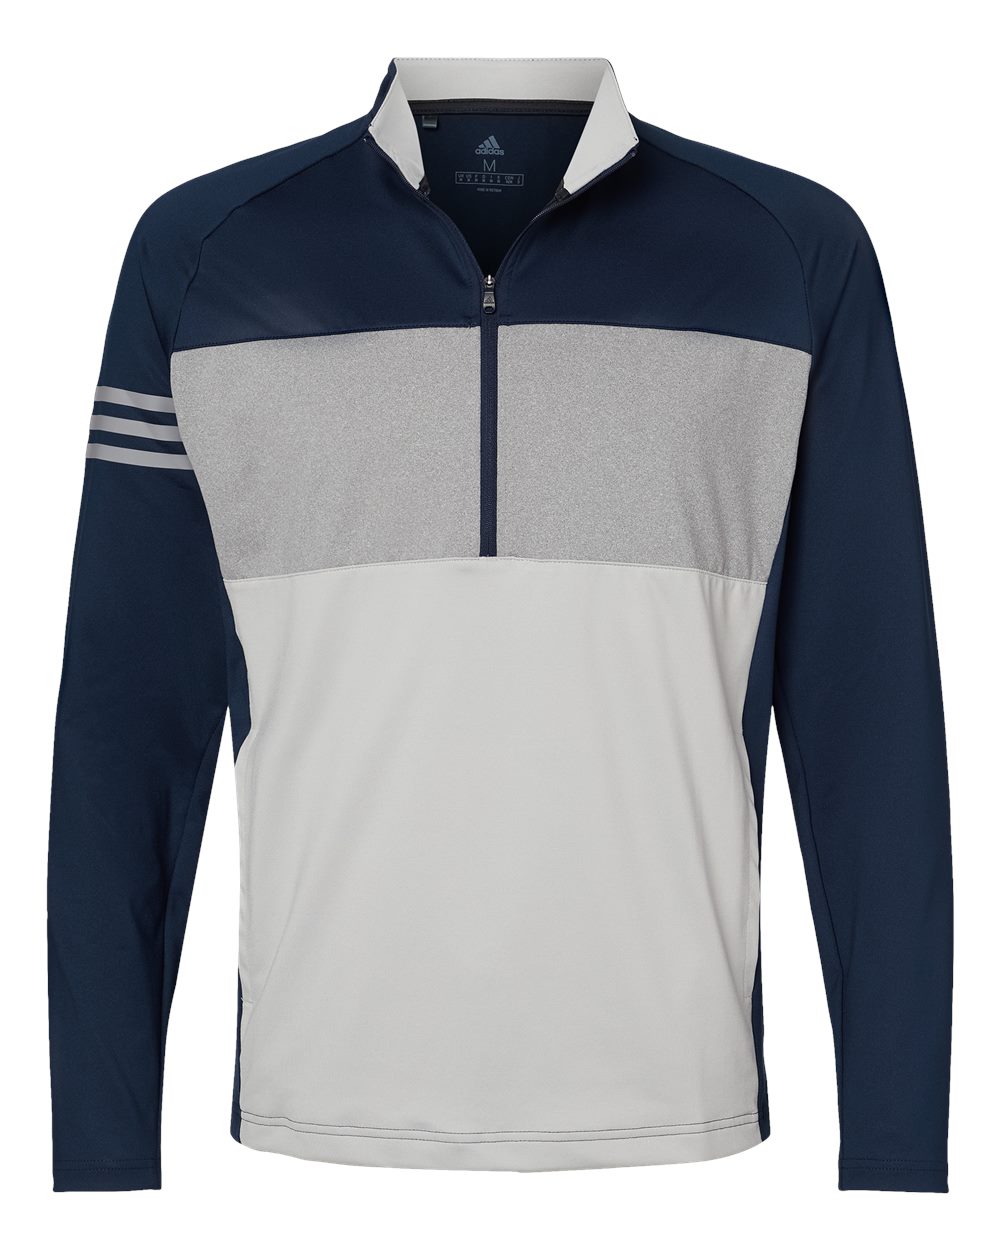 Adidas Mens 3-Stripes Competition Quarter-Zip Pullover Shirt A492 | eBay